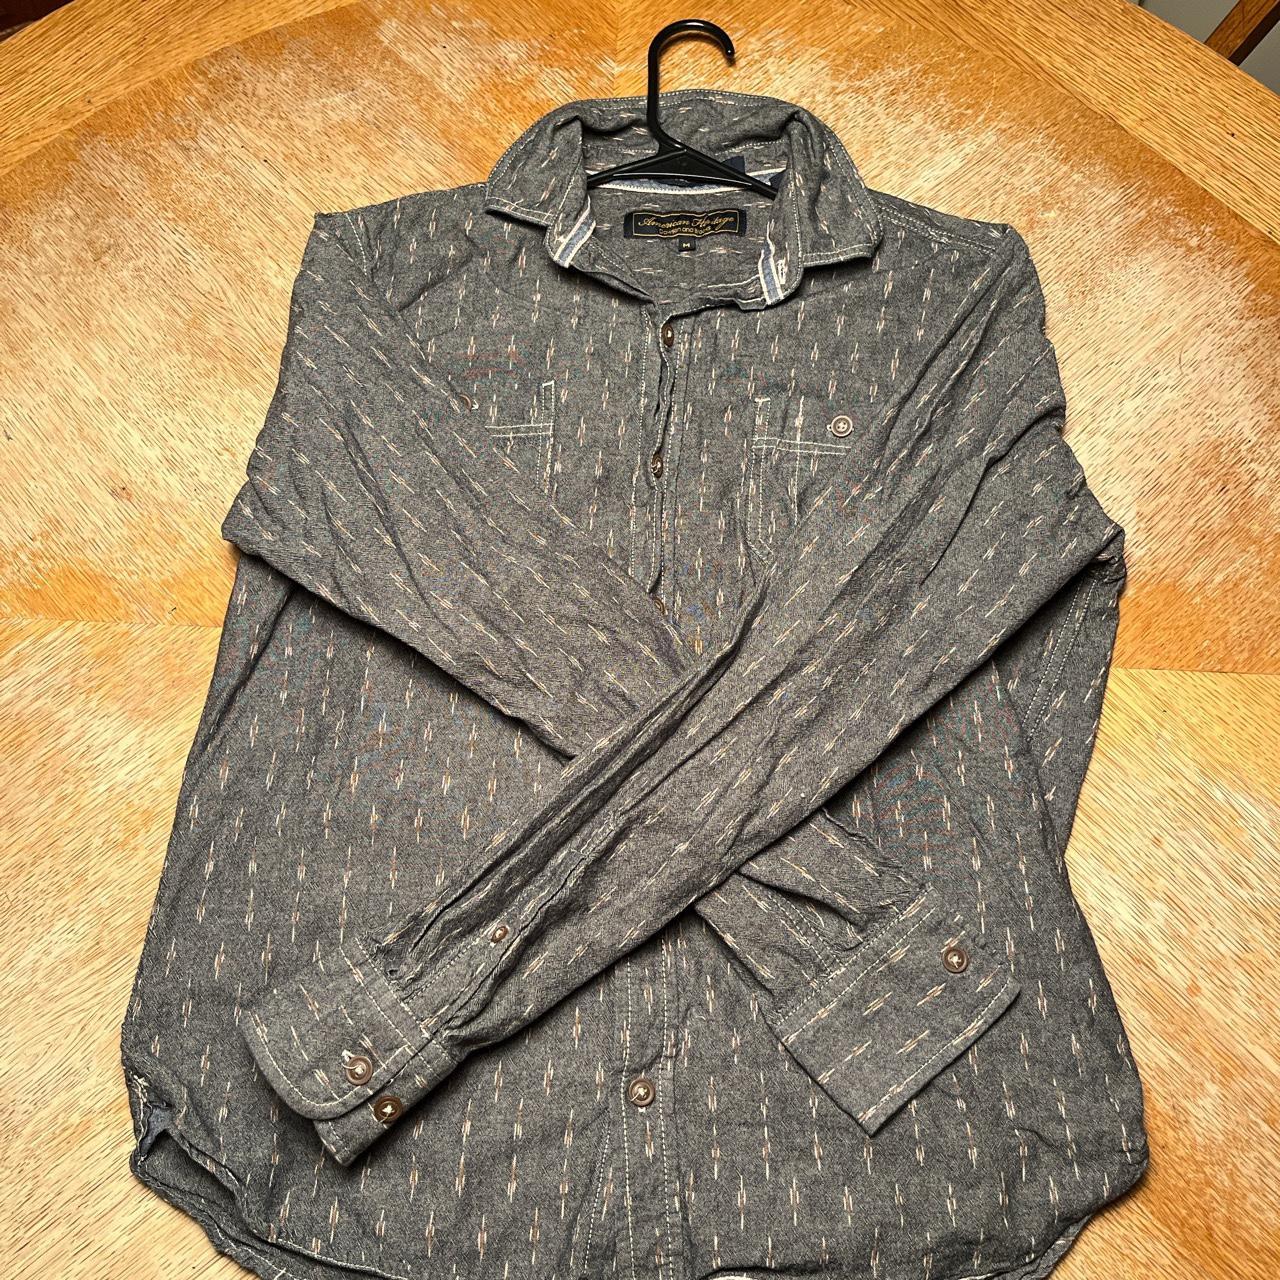 American Heritage Textiles Men's Grey and Tan Jacket (2)